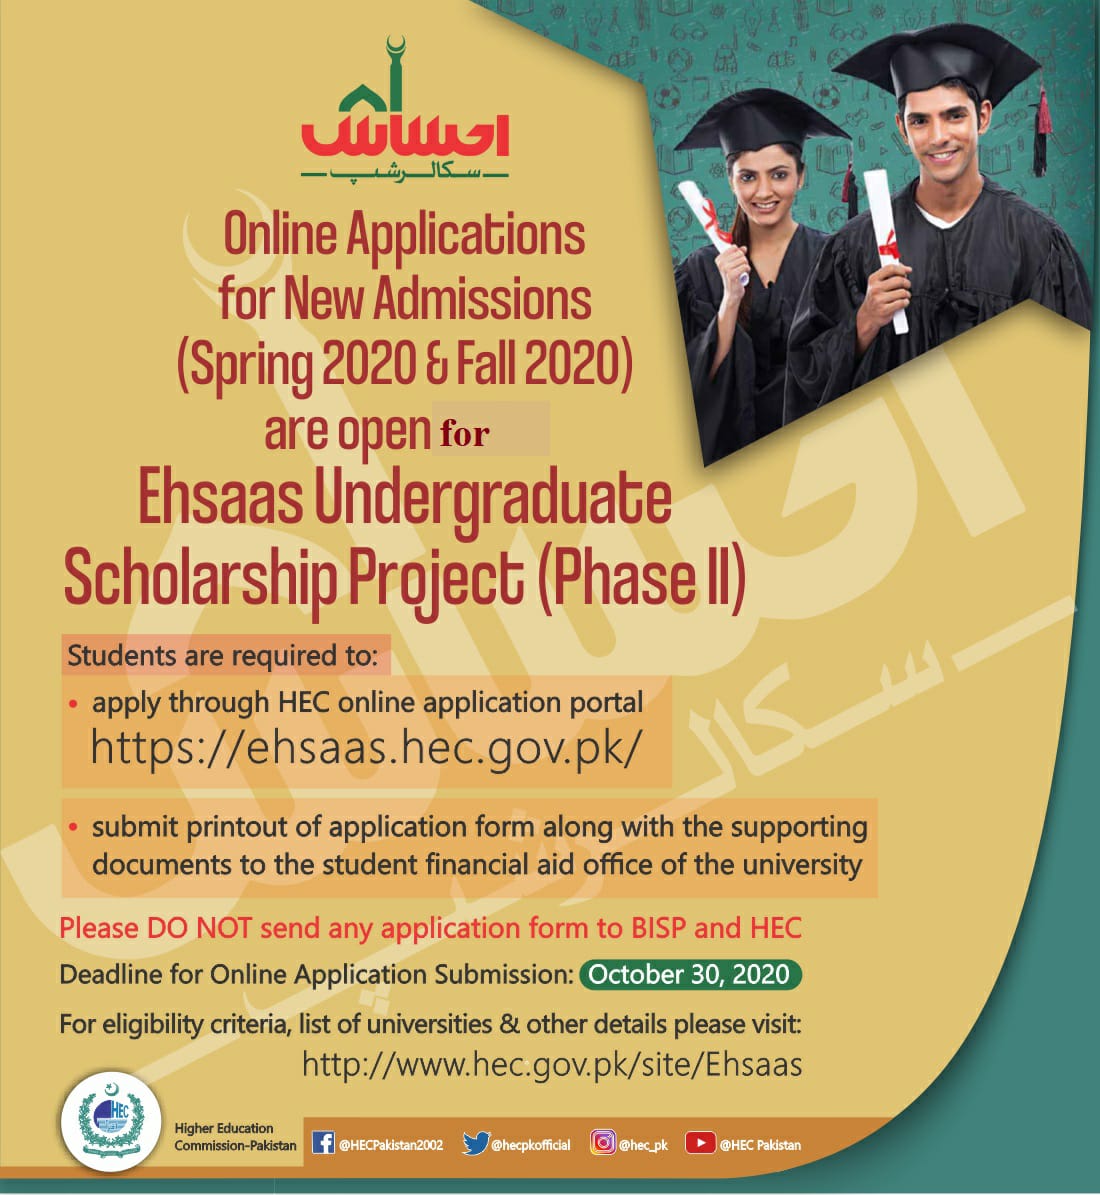 Announcement of Ehsaas Undergraduate Scholarship Program - Phase II